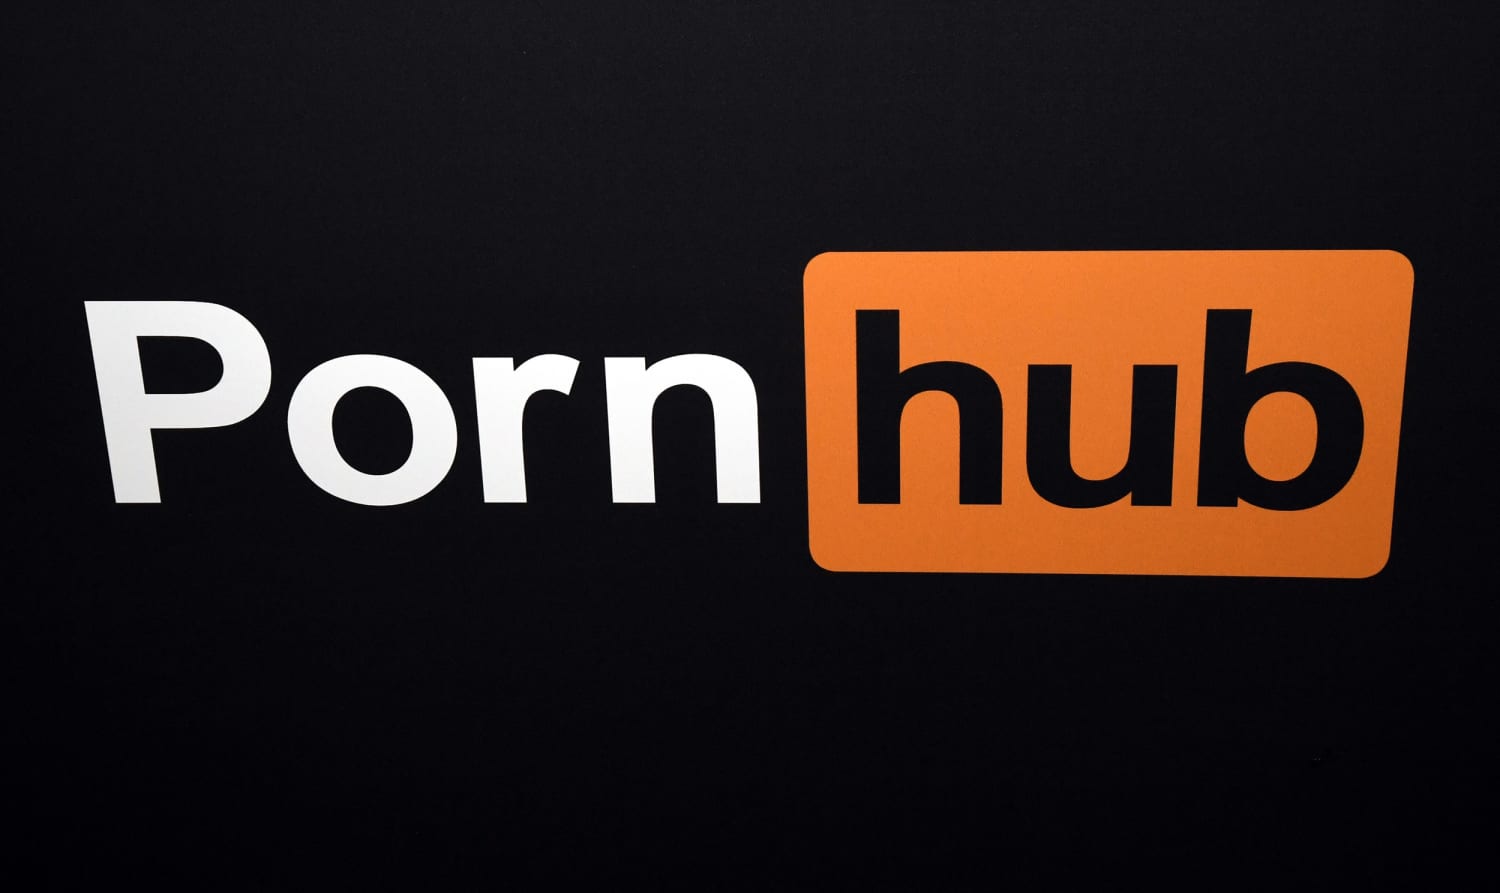 Porn Hub For Women - Dozens of women sue Pornhub, alleging it published nonconsensual clips